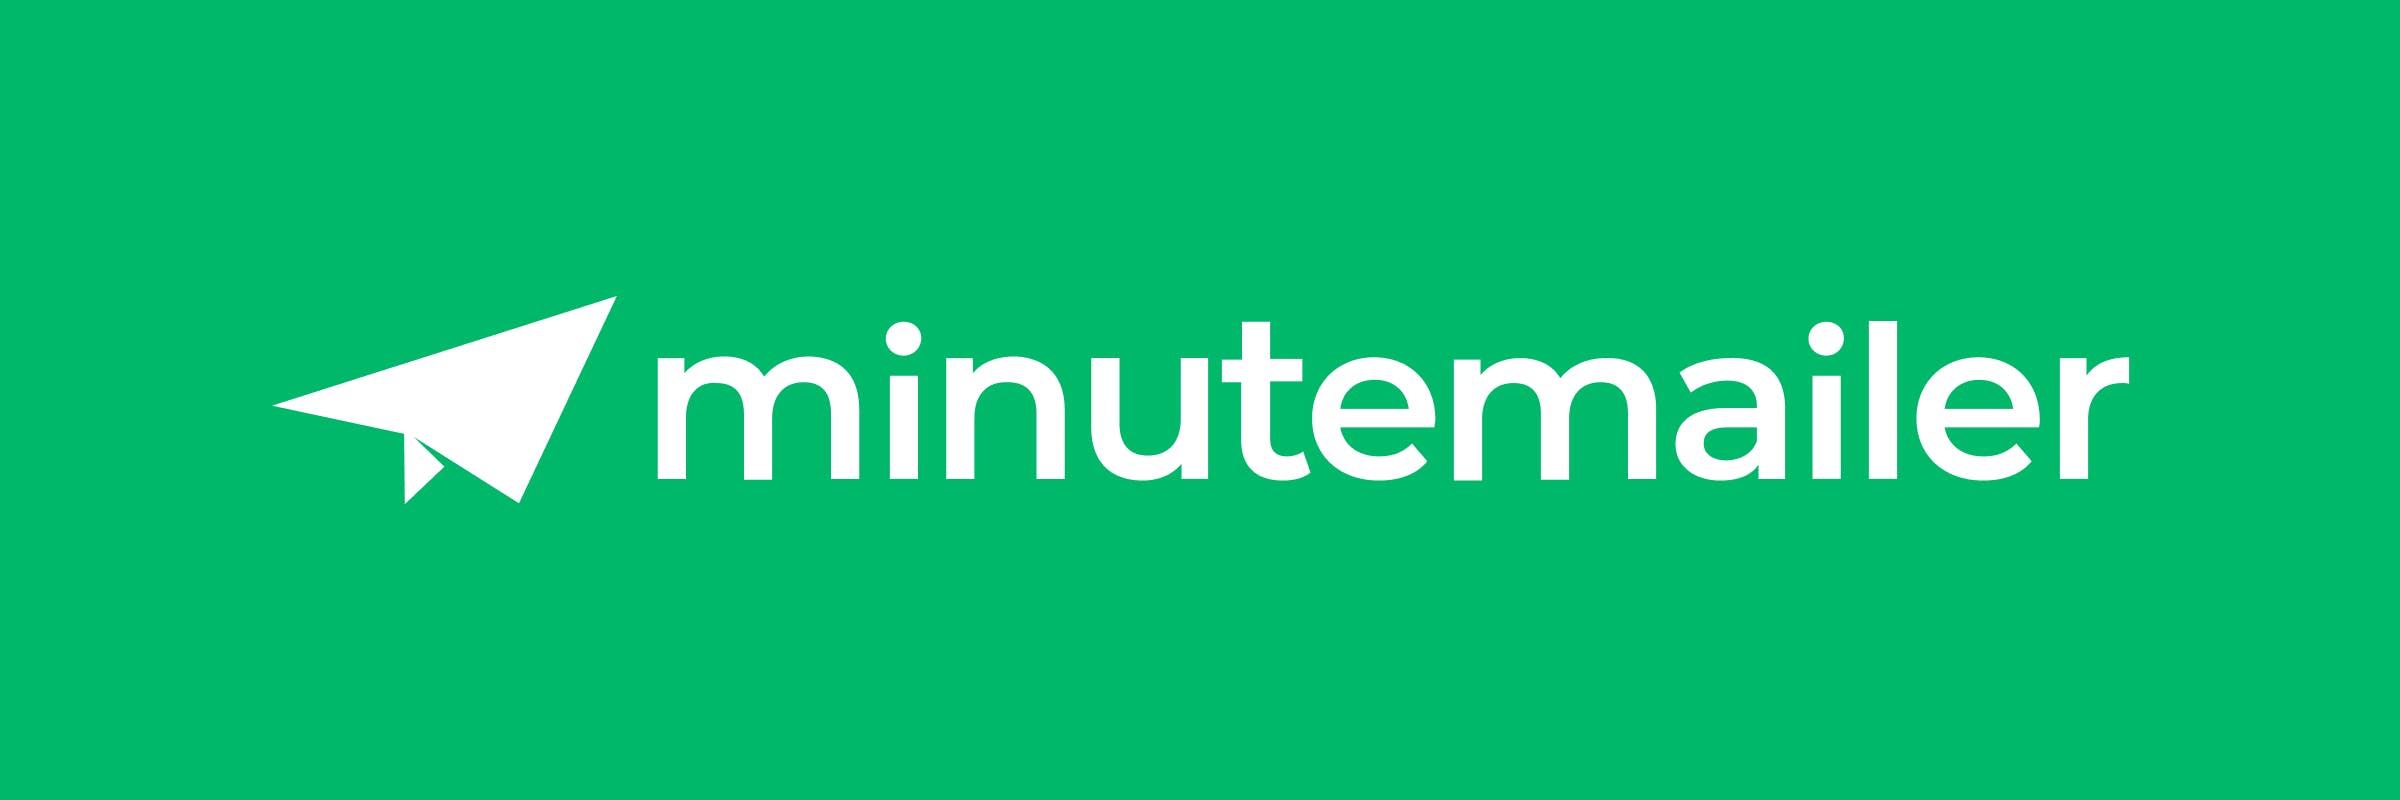 Minutemailer logotype